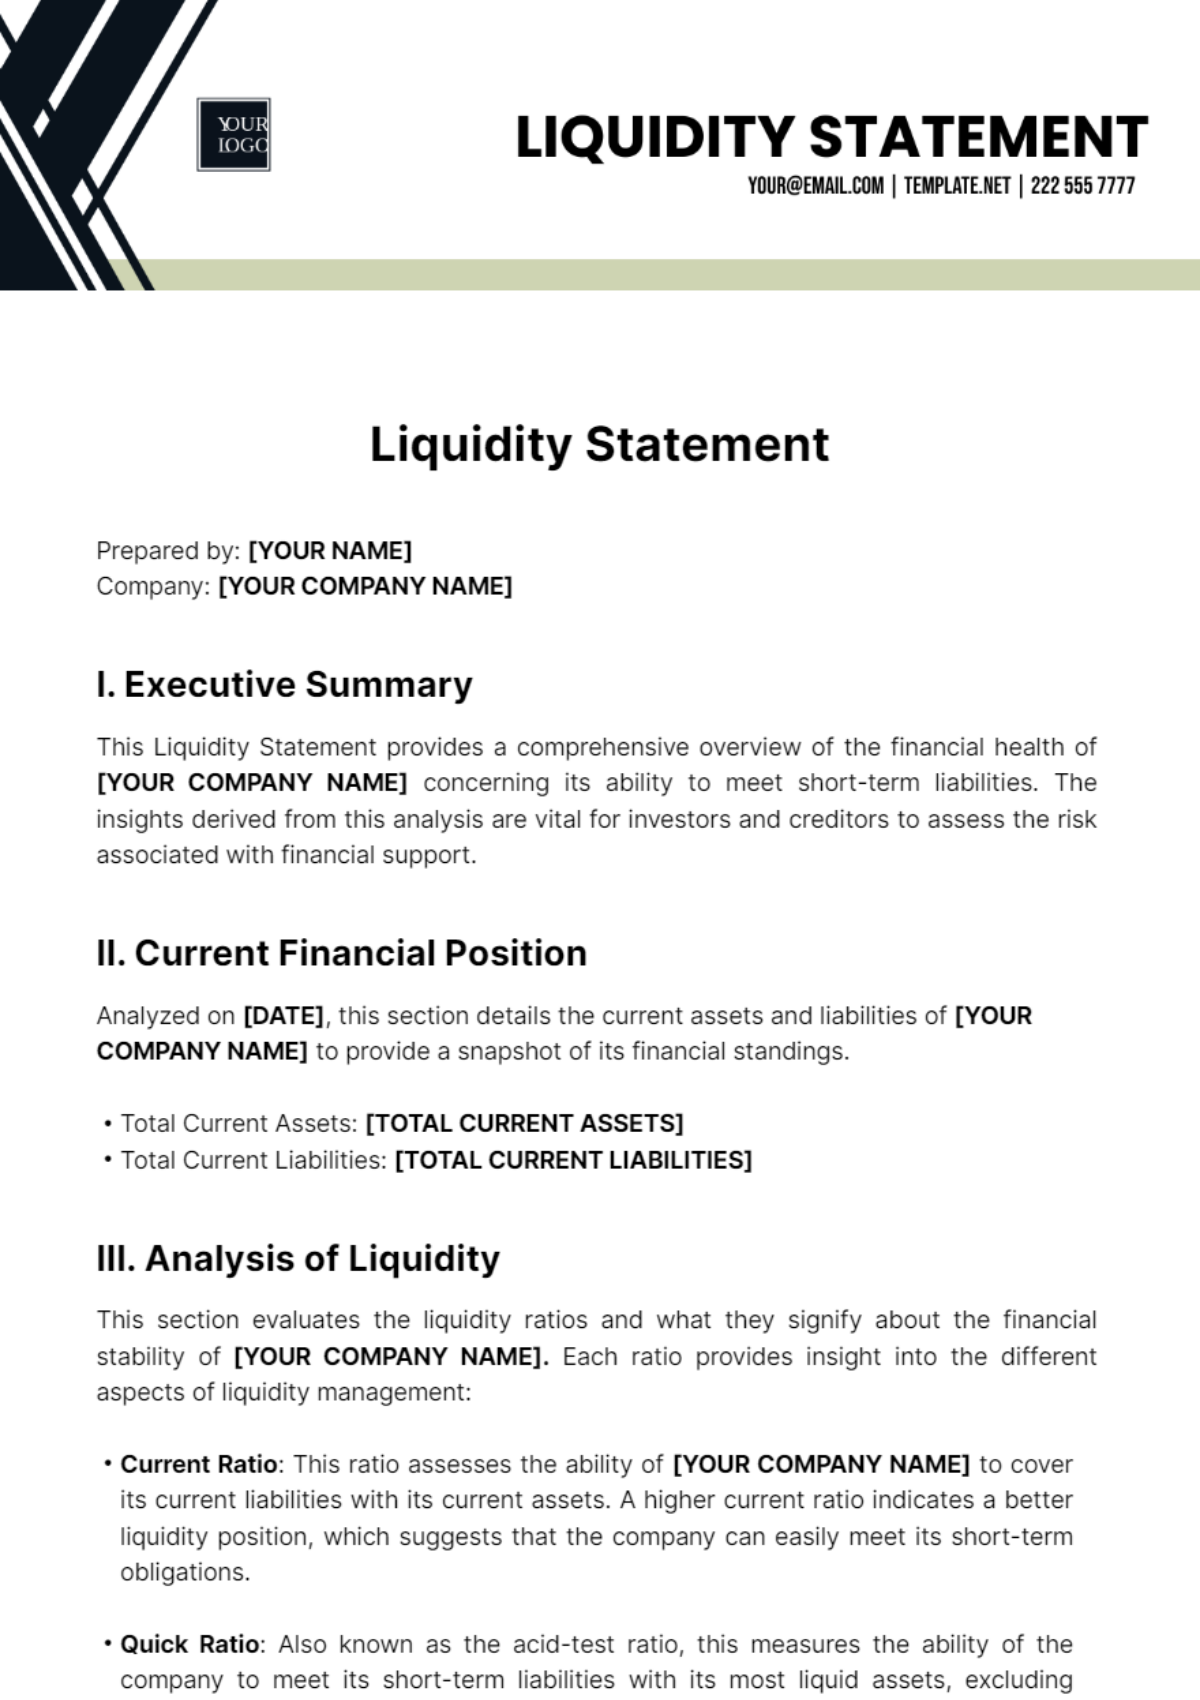 Liquidity Statement Template